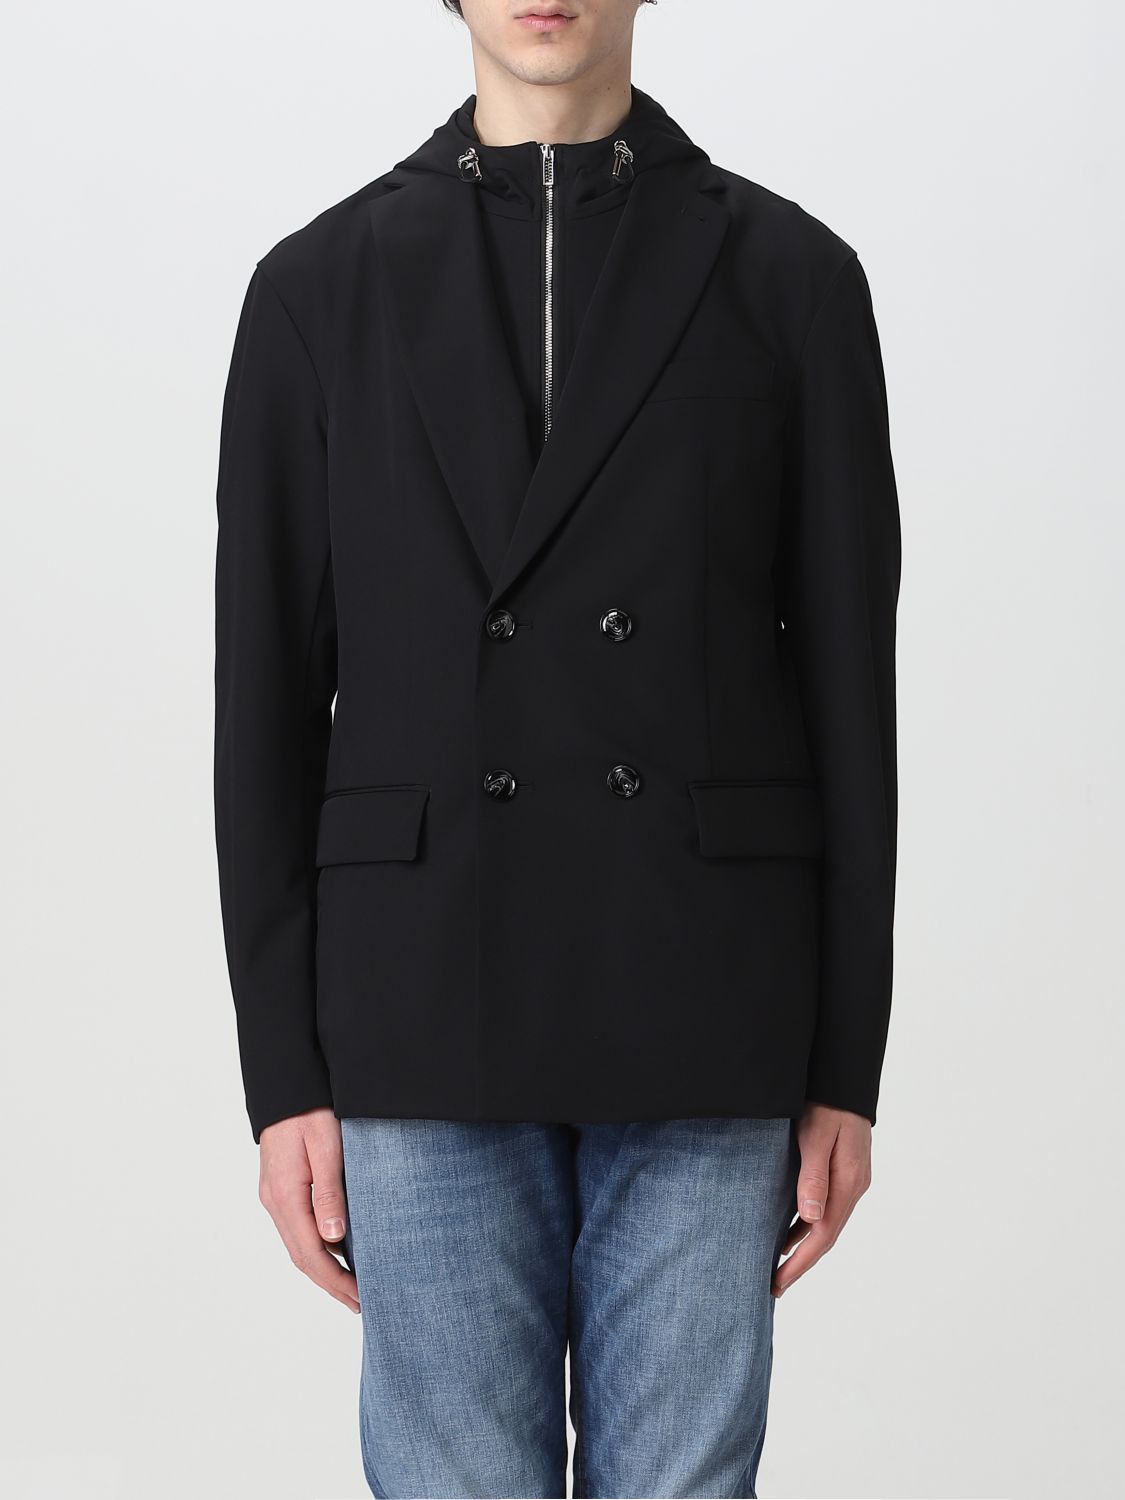 EMPORIO ARMANI: jacket for man - Black | Emporio Armani jacket 3R1GL91NNIZ  online on 